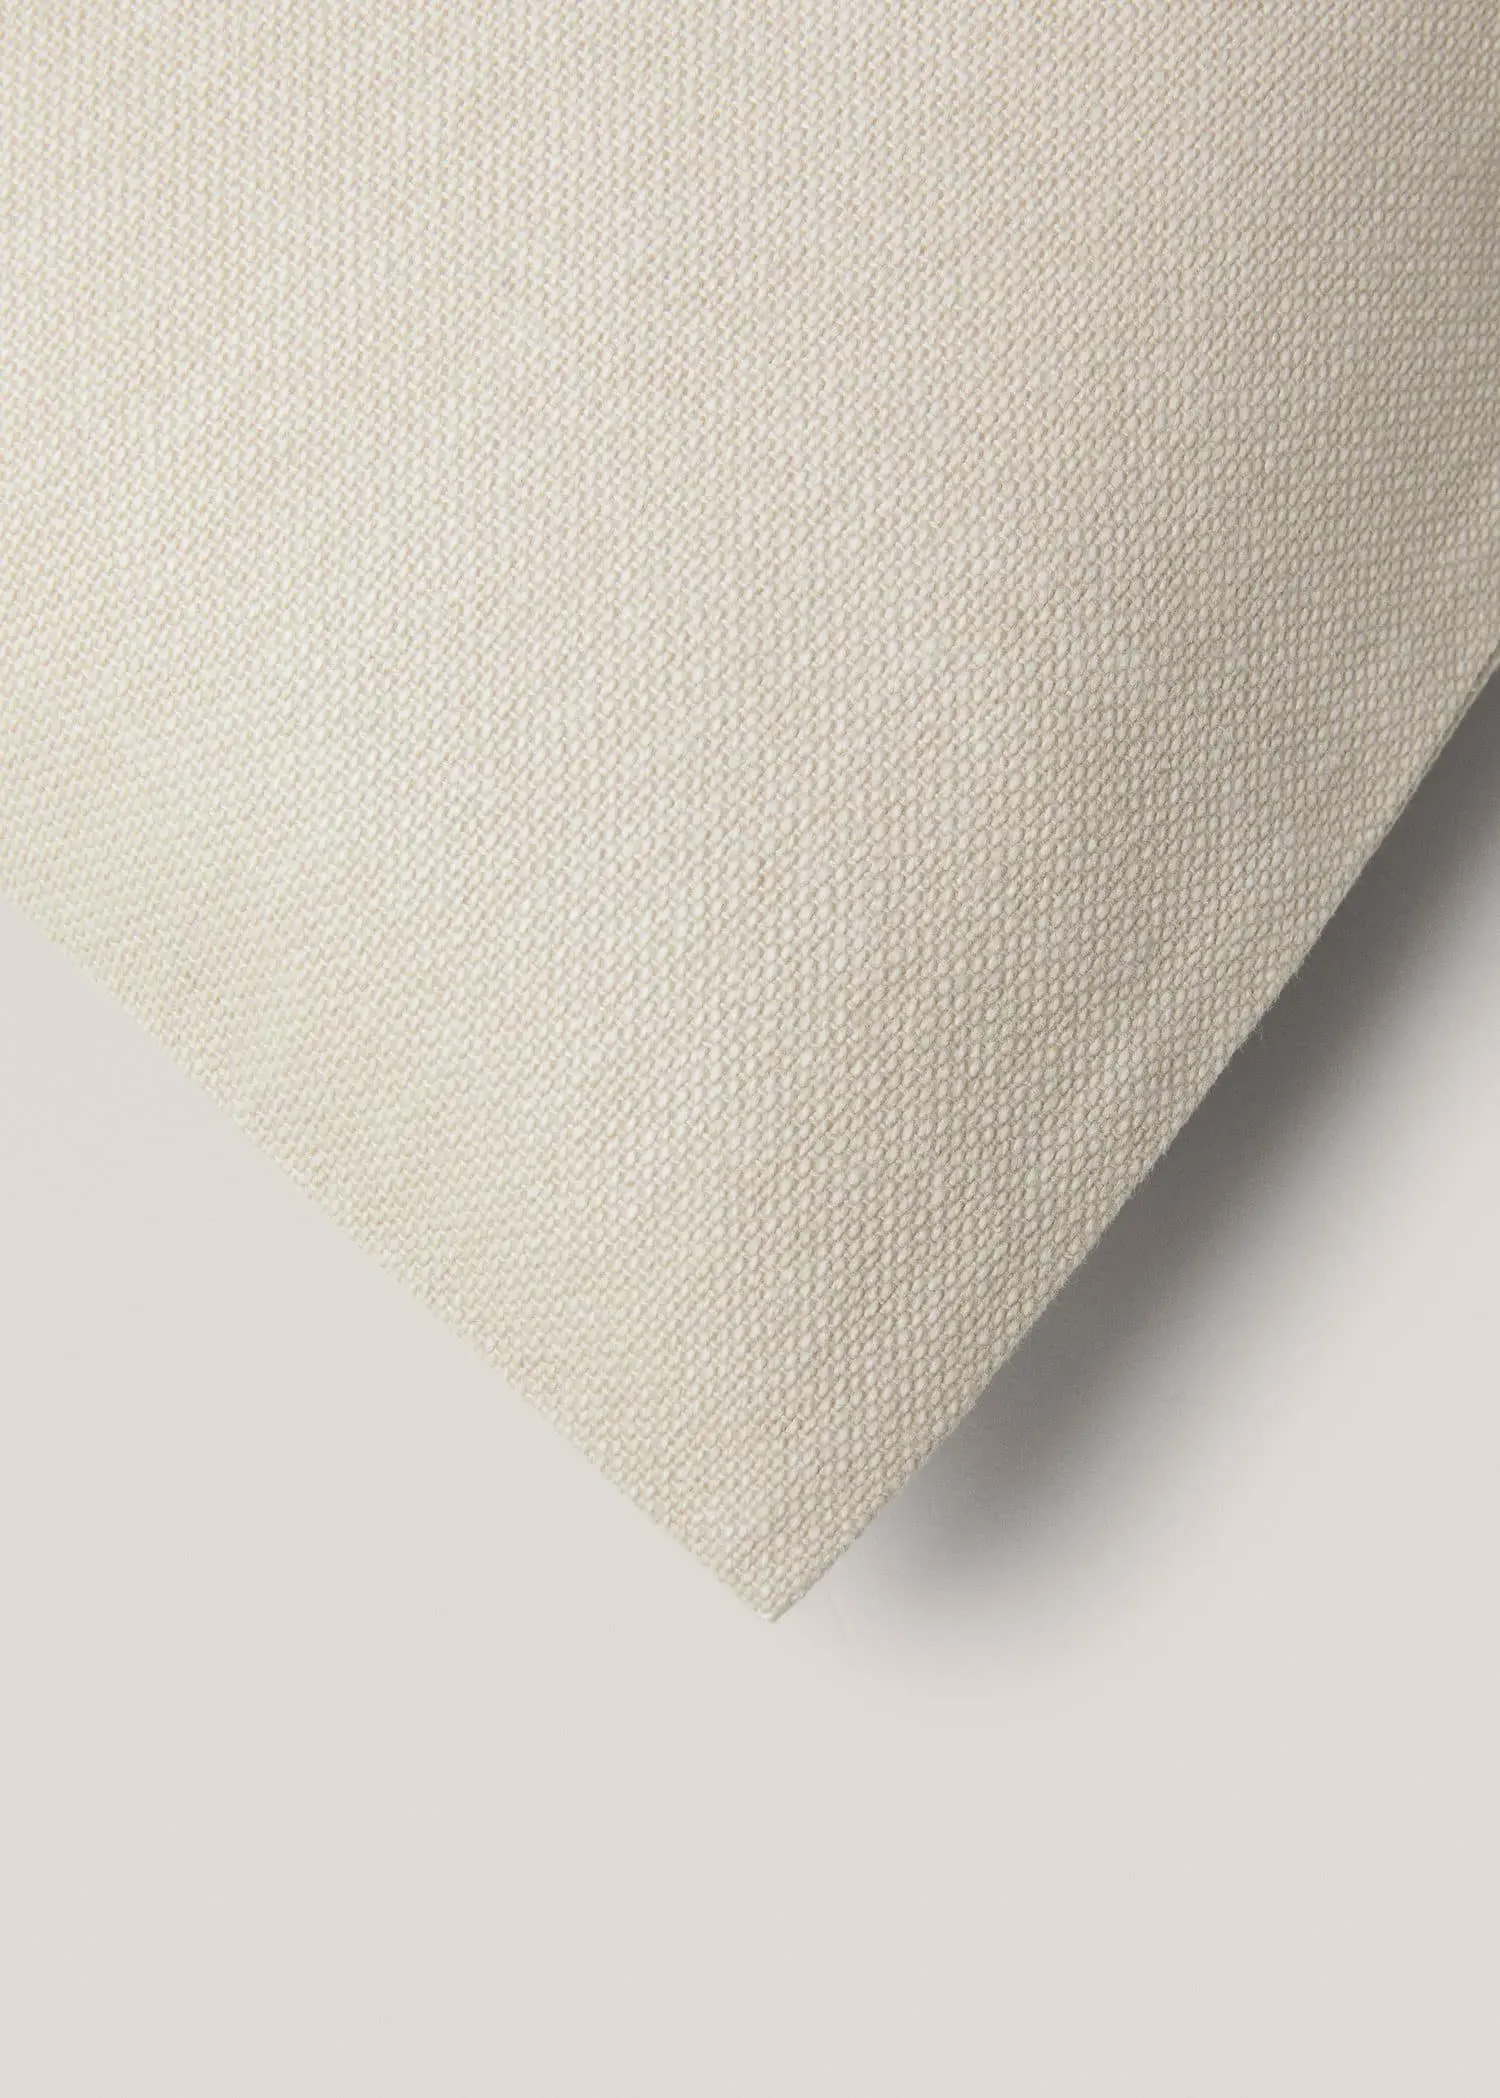 Mango Textured cotton cushion case 30x50cm. 3